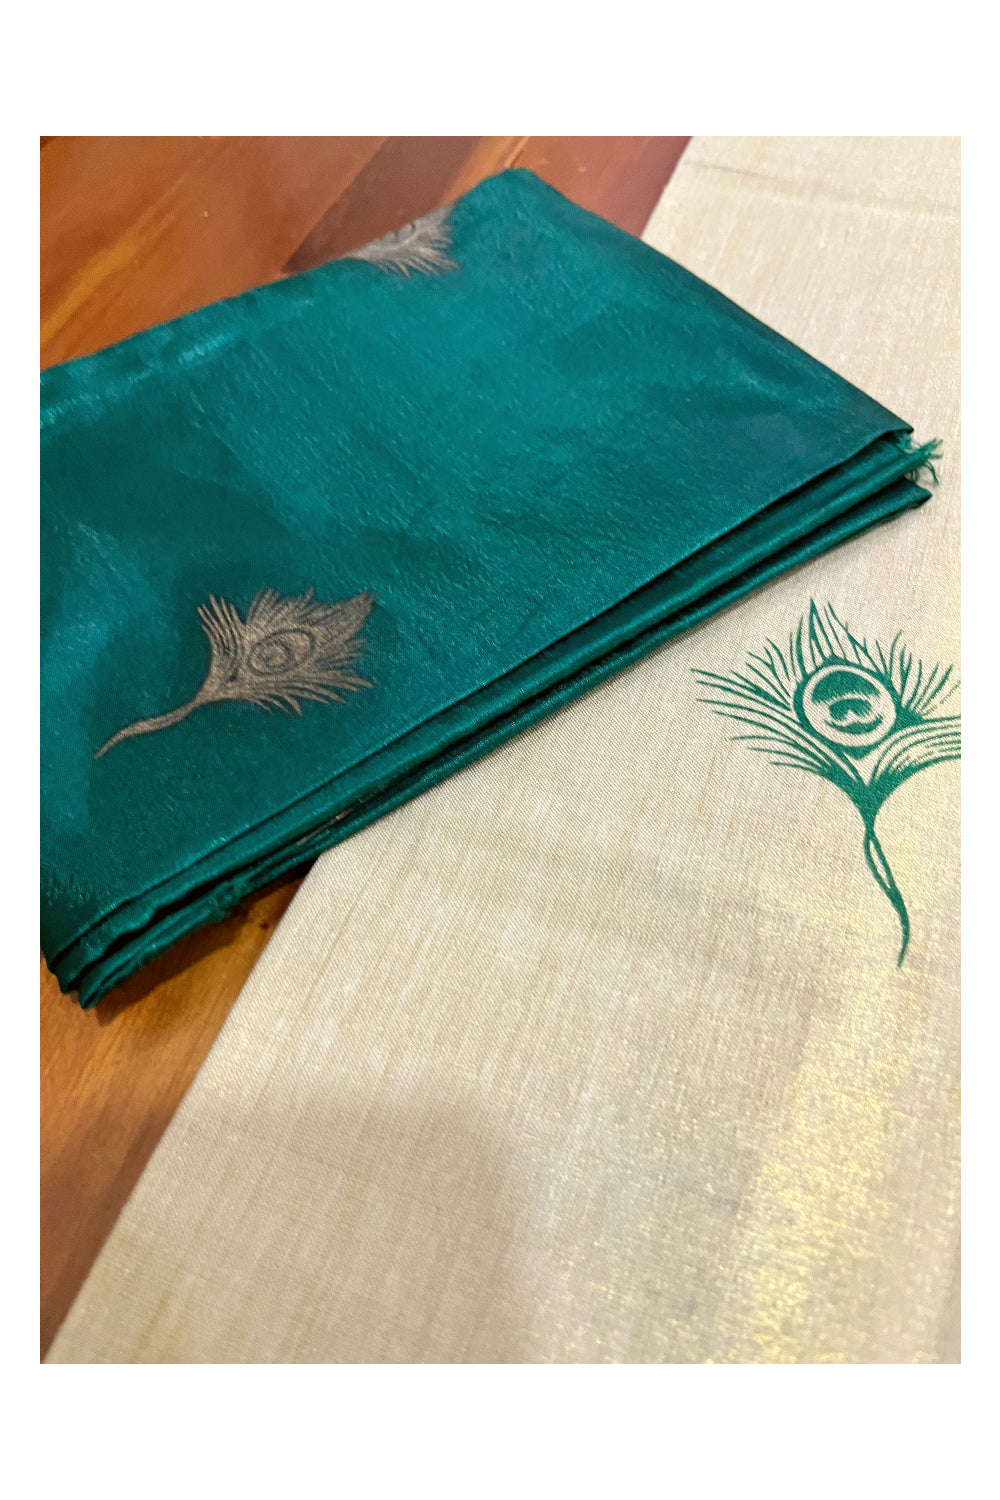 Kerala Tissue Block Printed Pavada and Green Blouse Material for Kids 3 Meters